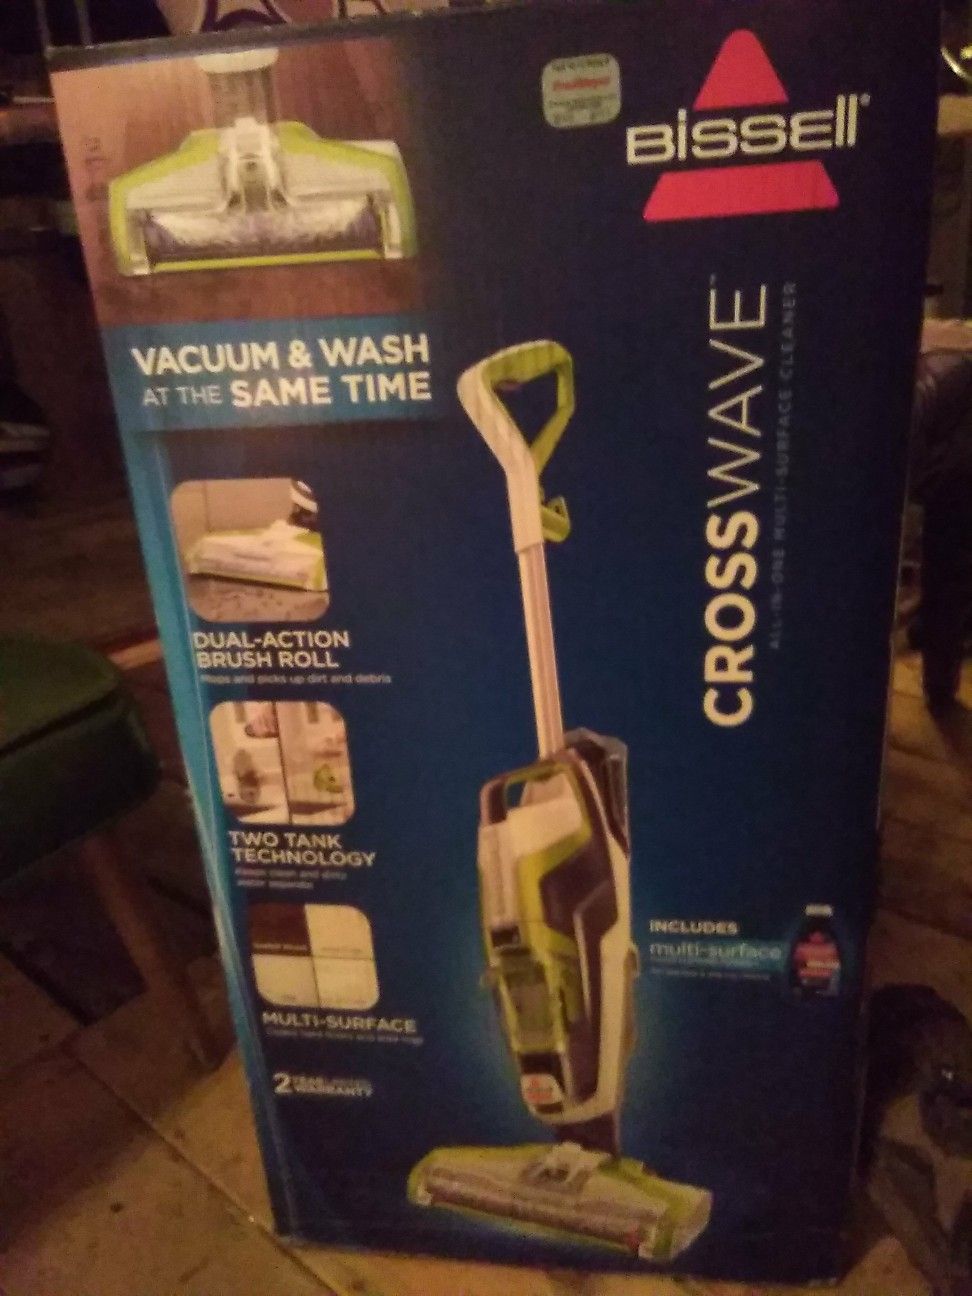 Brissel cross wave vacuum & wash at same time